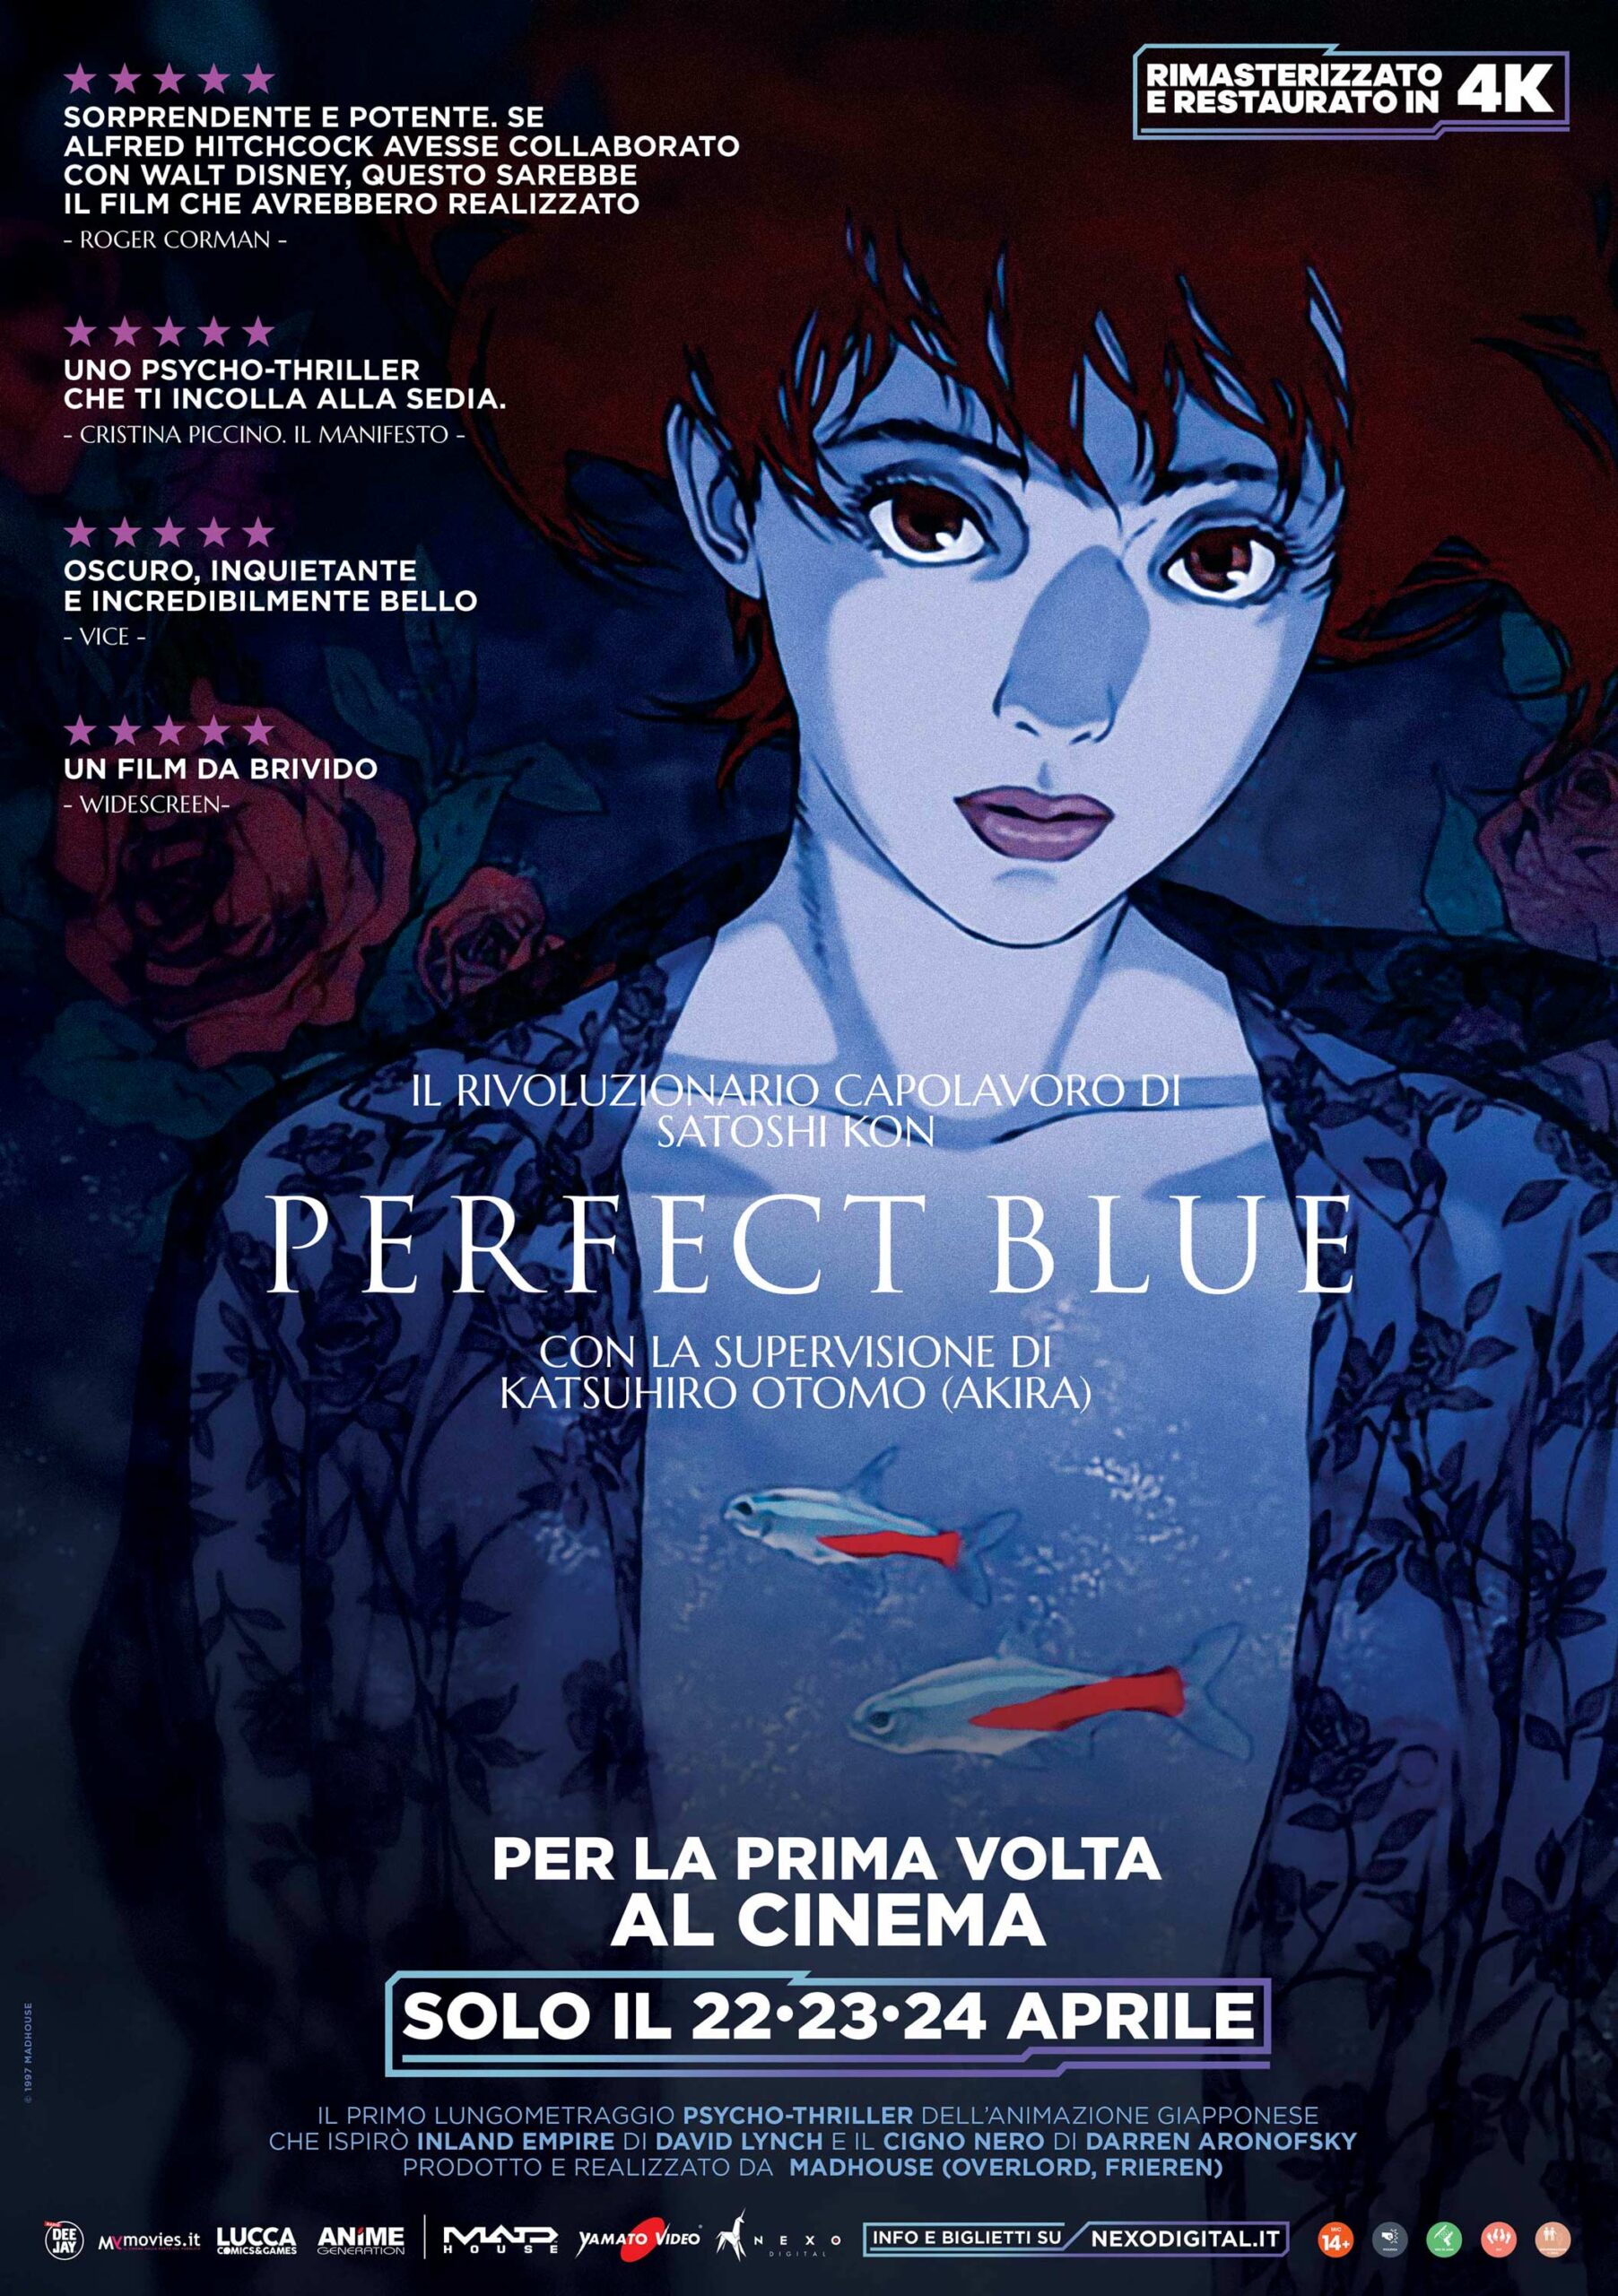 Perfect Blue di Satoshi Kon al cinema in versione restaurata 4K